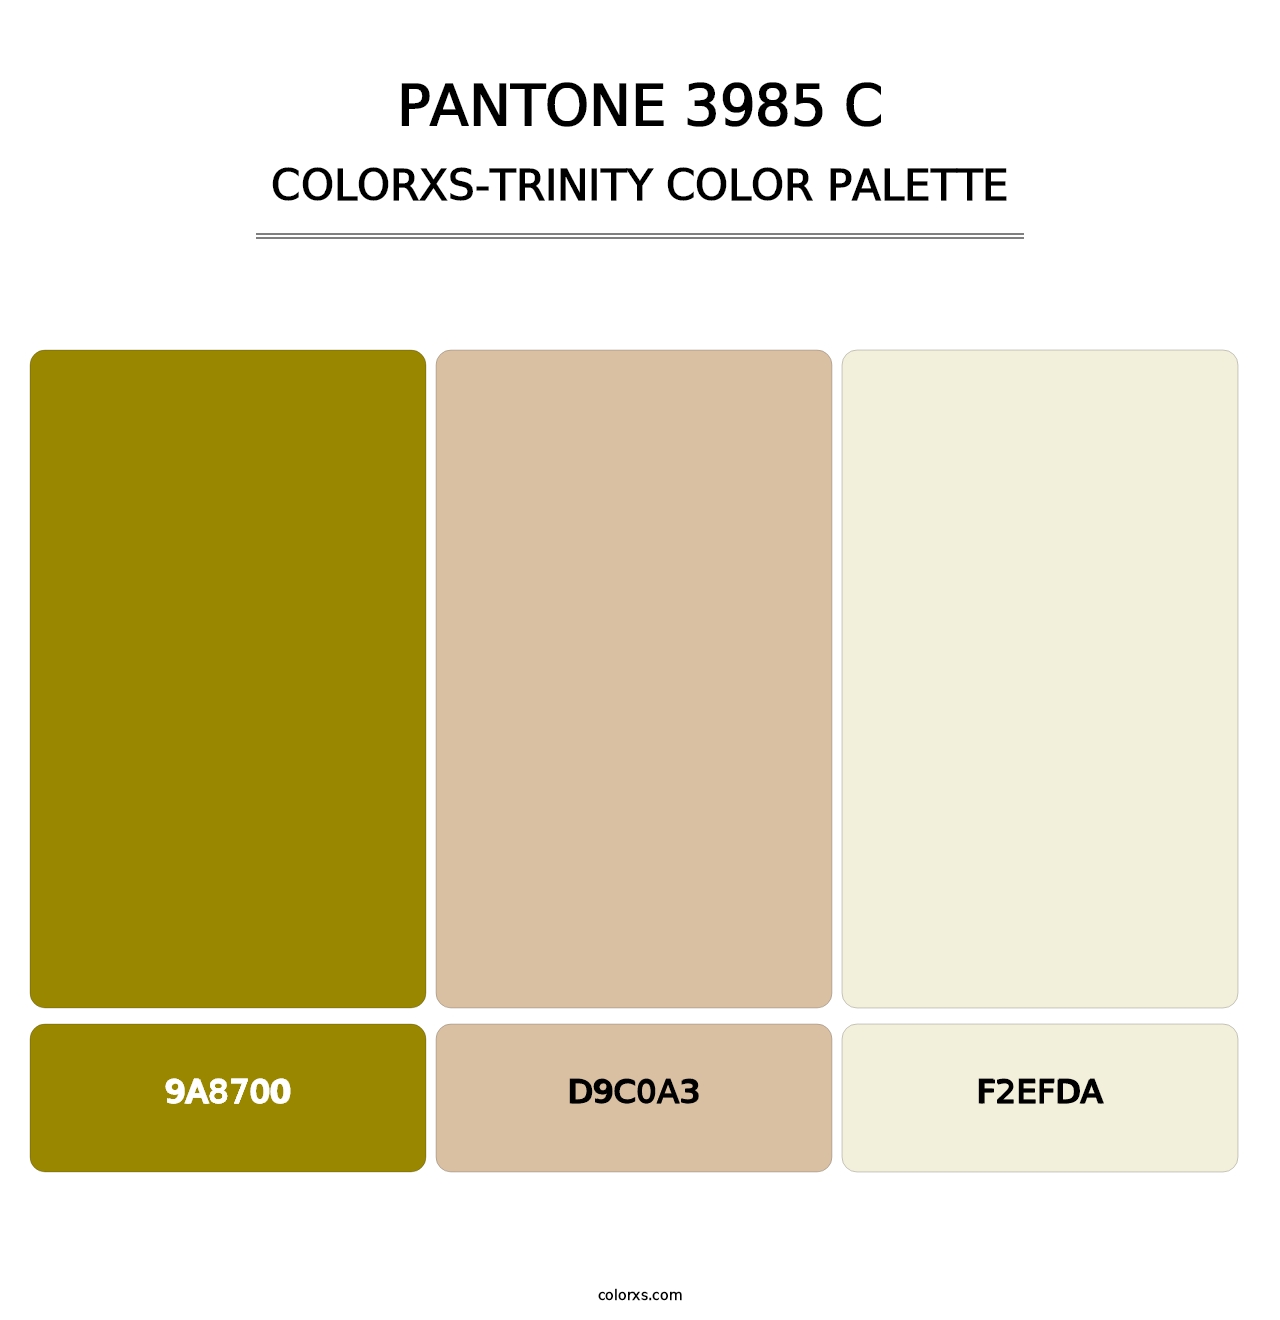 PANTONE 3985 C - Colorxs Trinity Palette